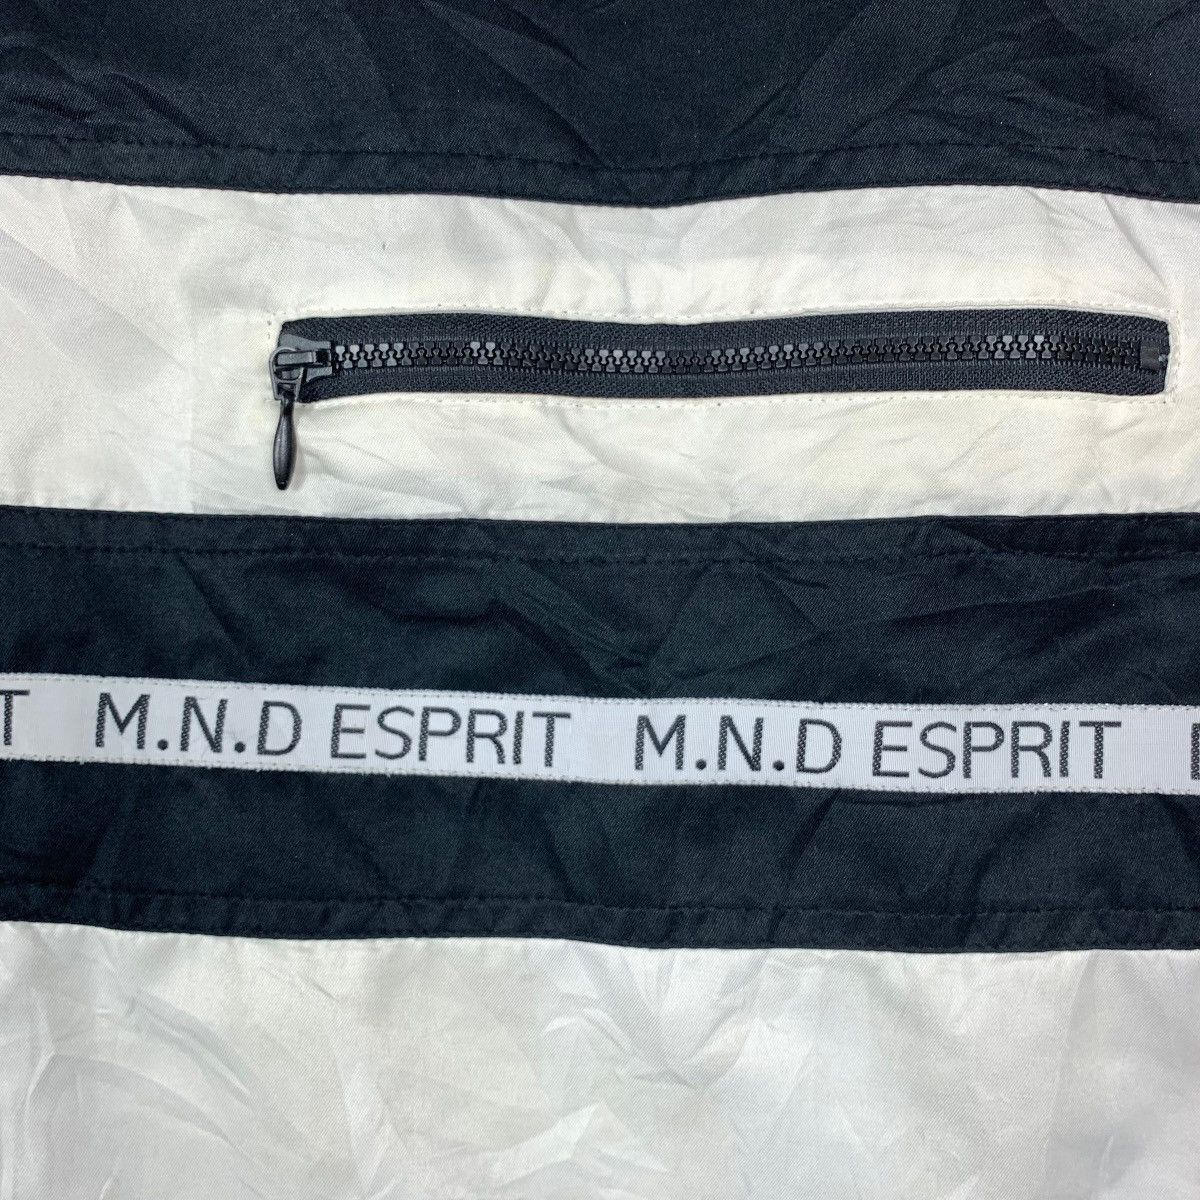 Esprit Vintage Monads Espirit Two Tone Zipper Coach Jacket Size US L / EU 52-54 / 3 - 4 Thumbnail